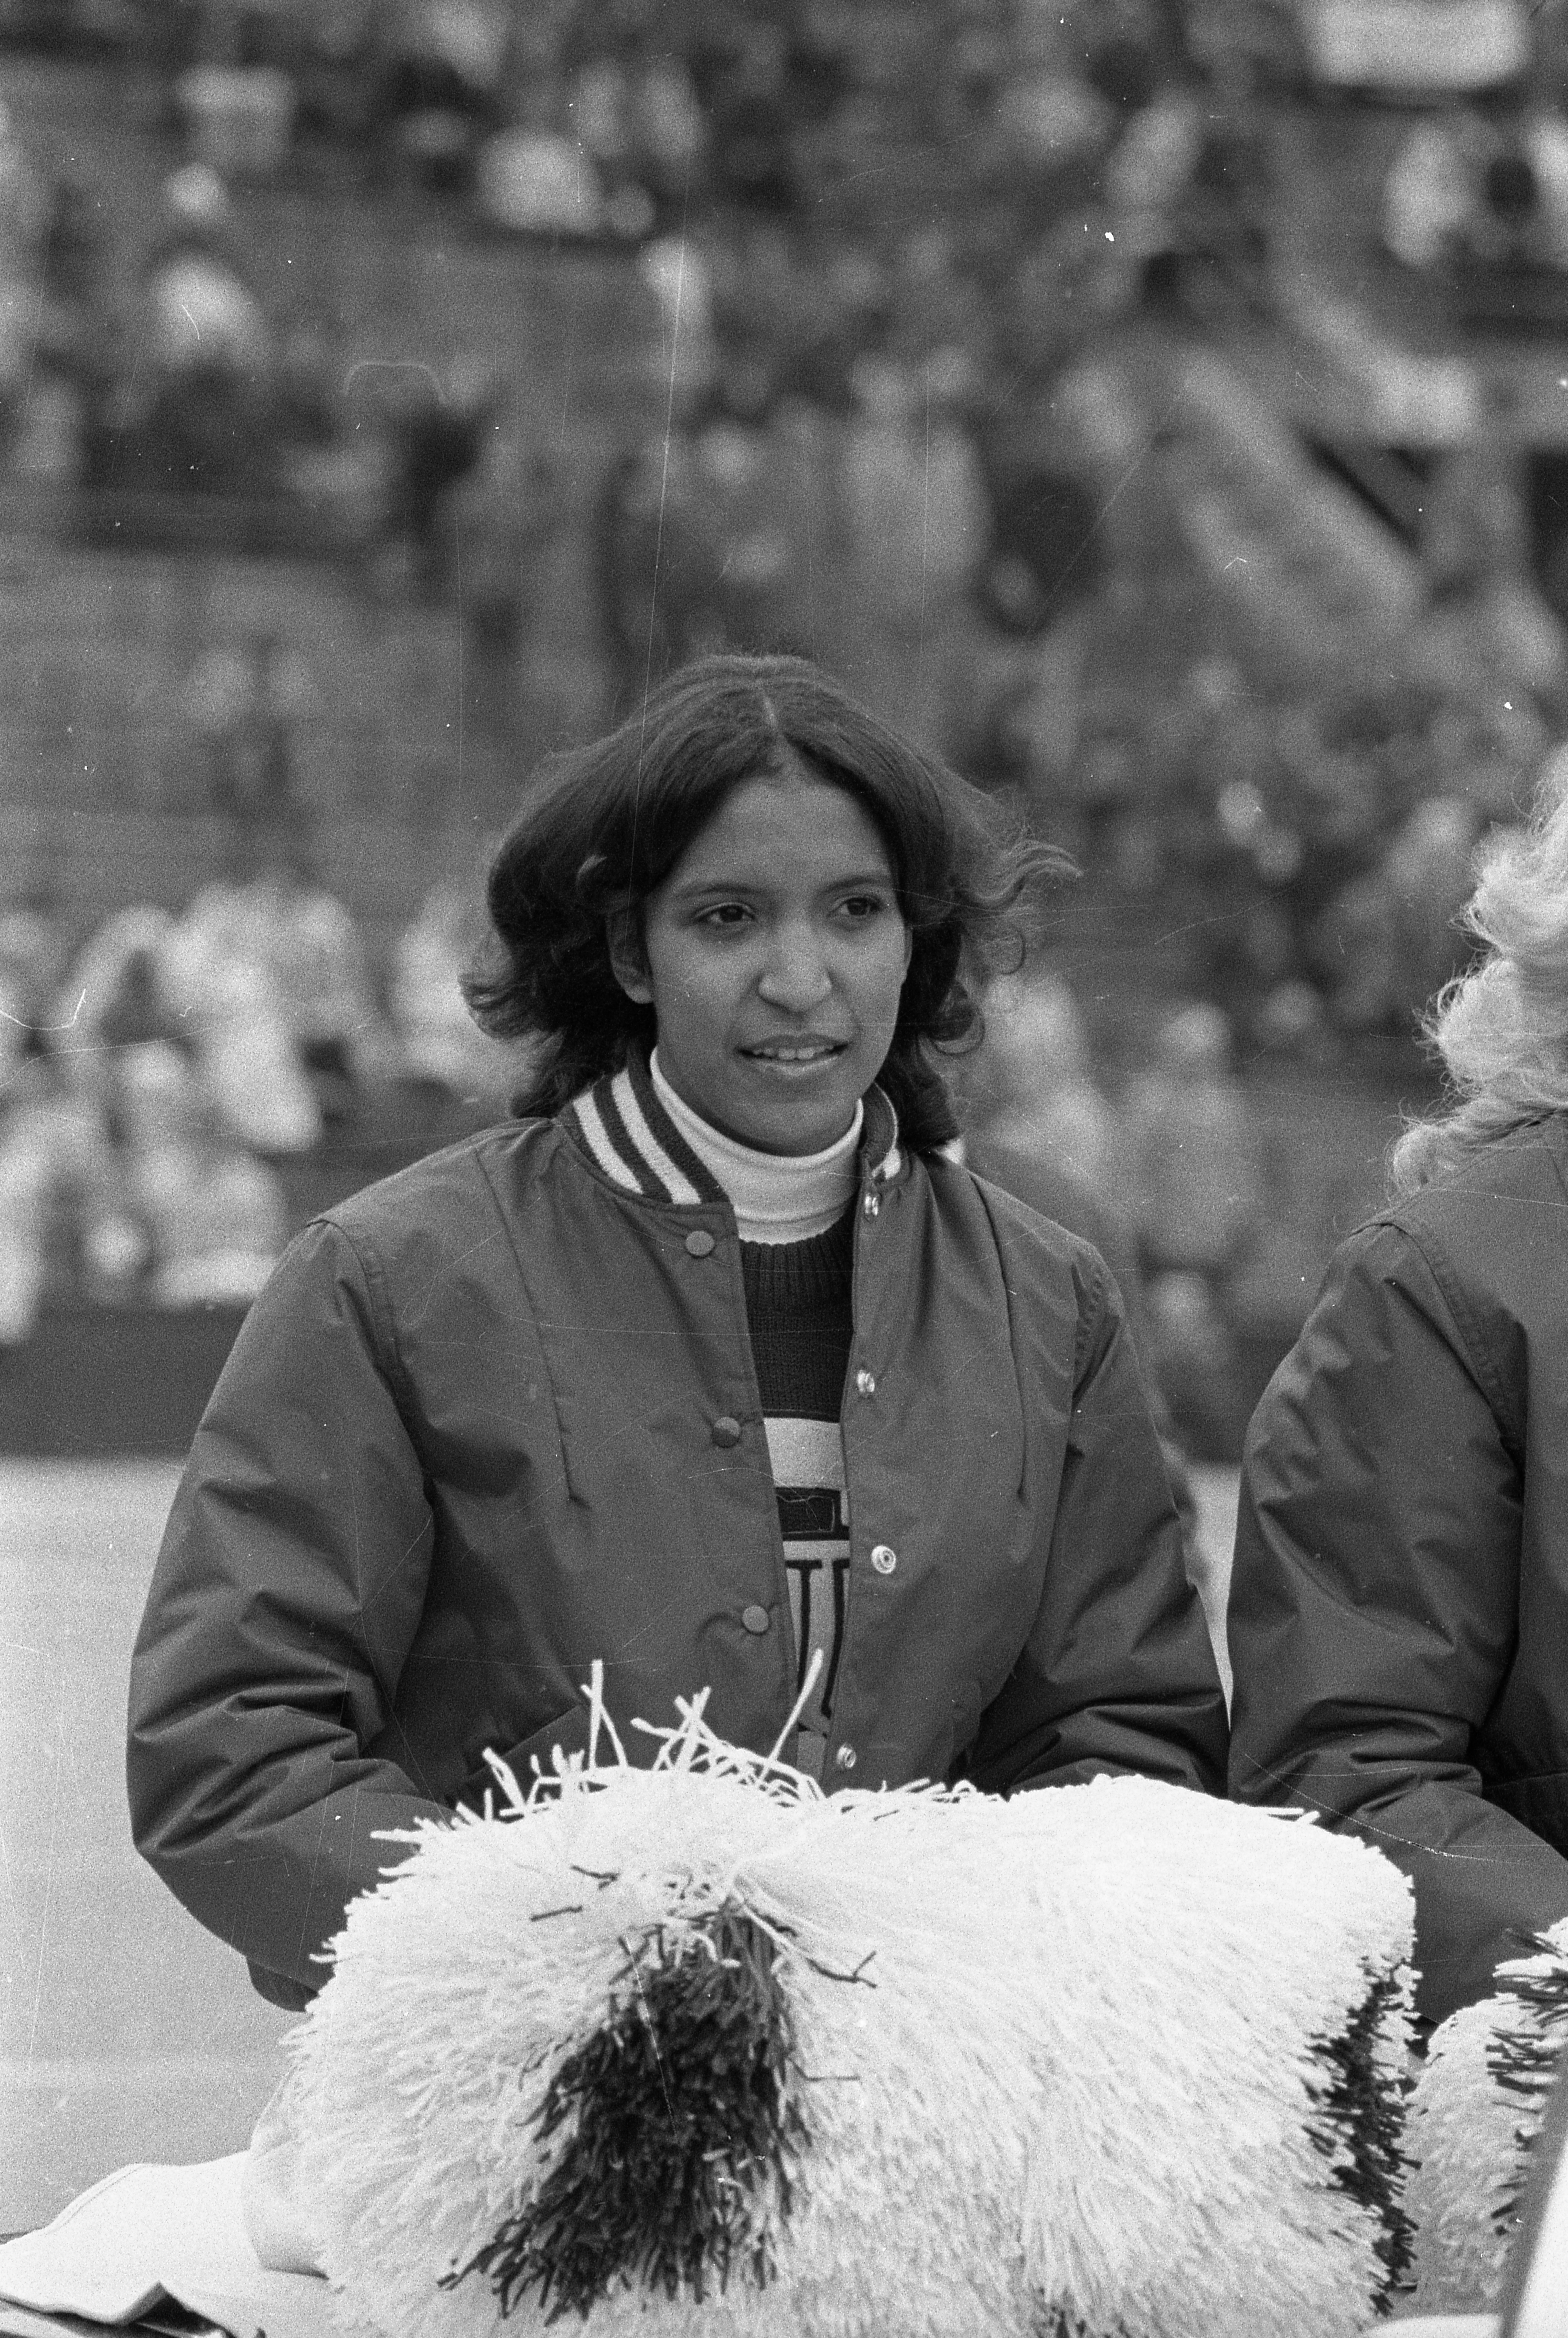 Cheerleaders at the MSU vs Northwestern football game, 1972